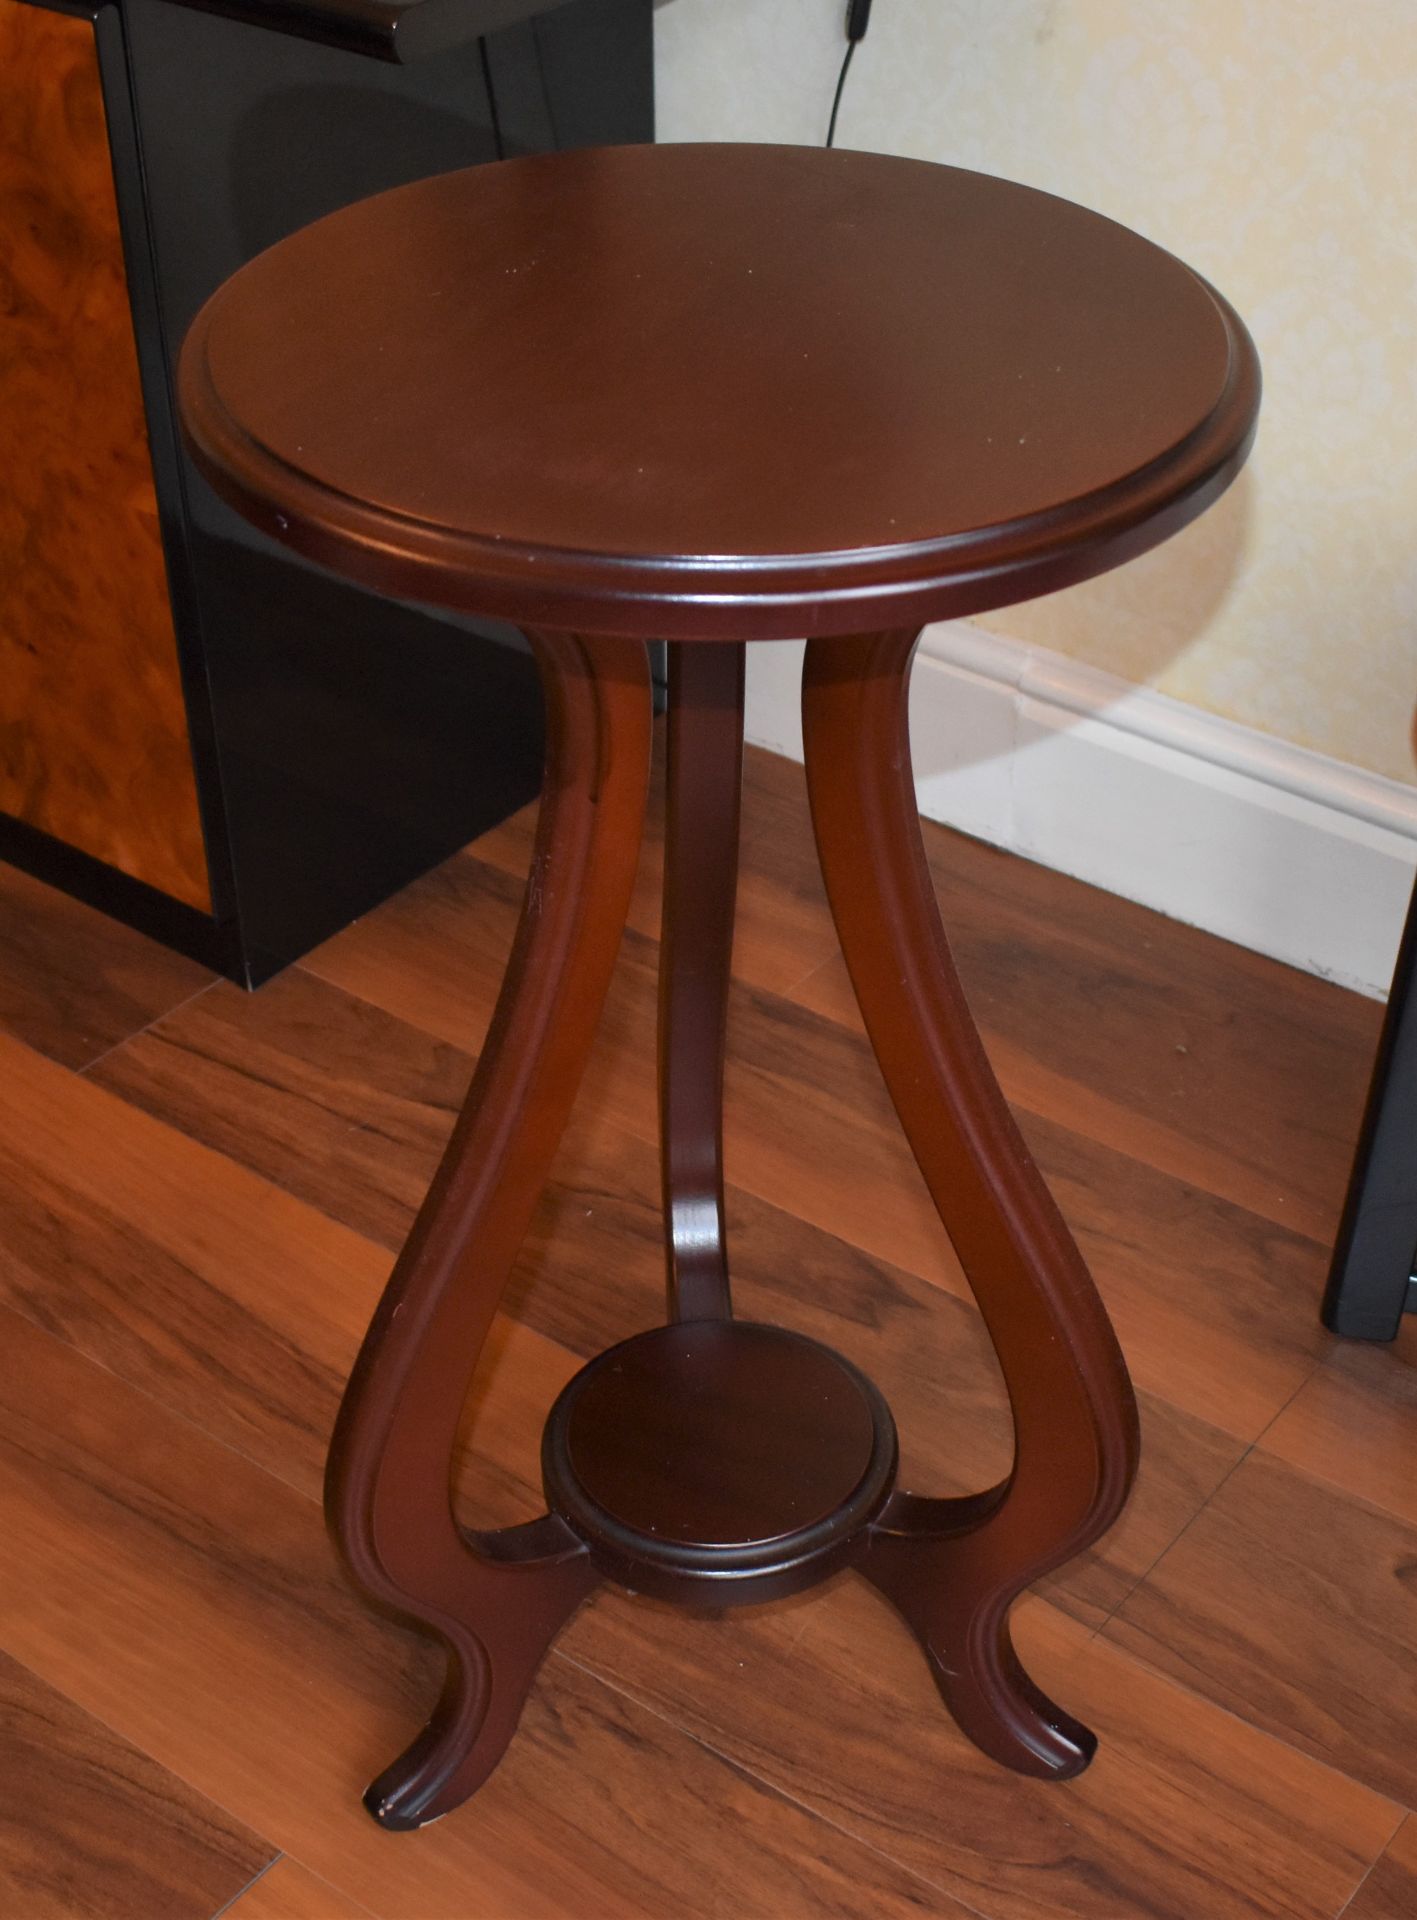 1 x Mahogany Lamp / Vase Table With Elegant Triple Leg Base and Undershelf - Dimensions H75 x W37 - Image 2 of 5